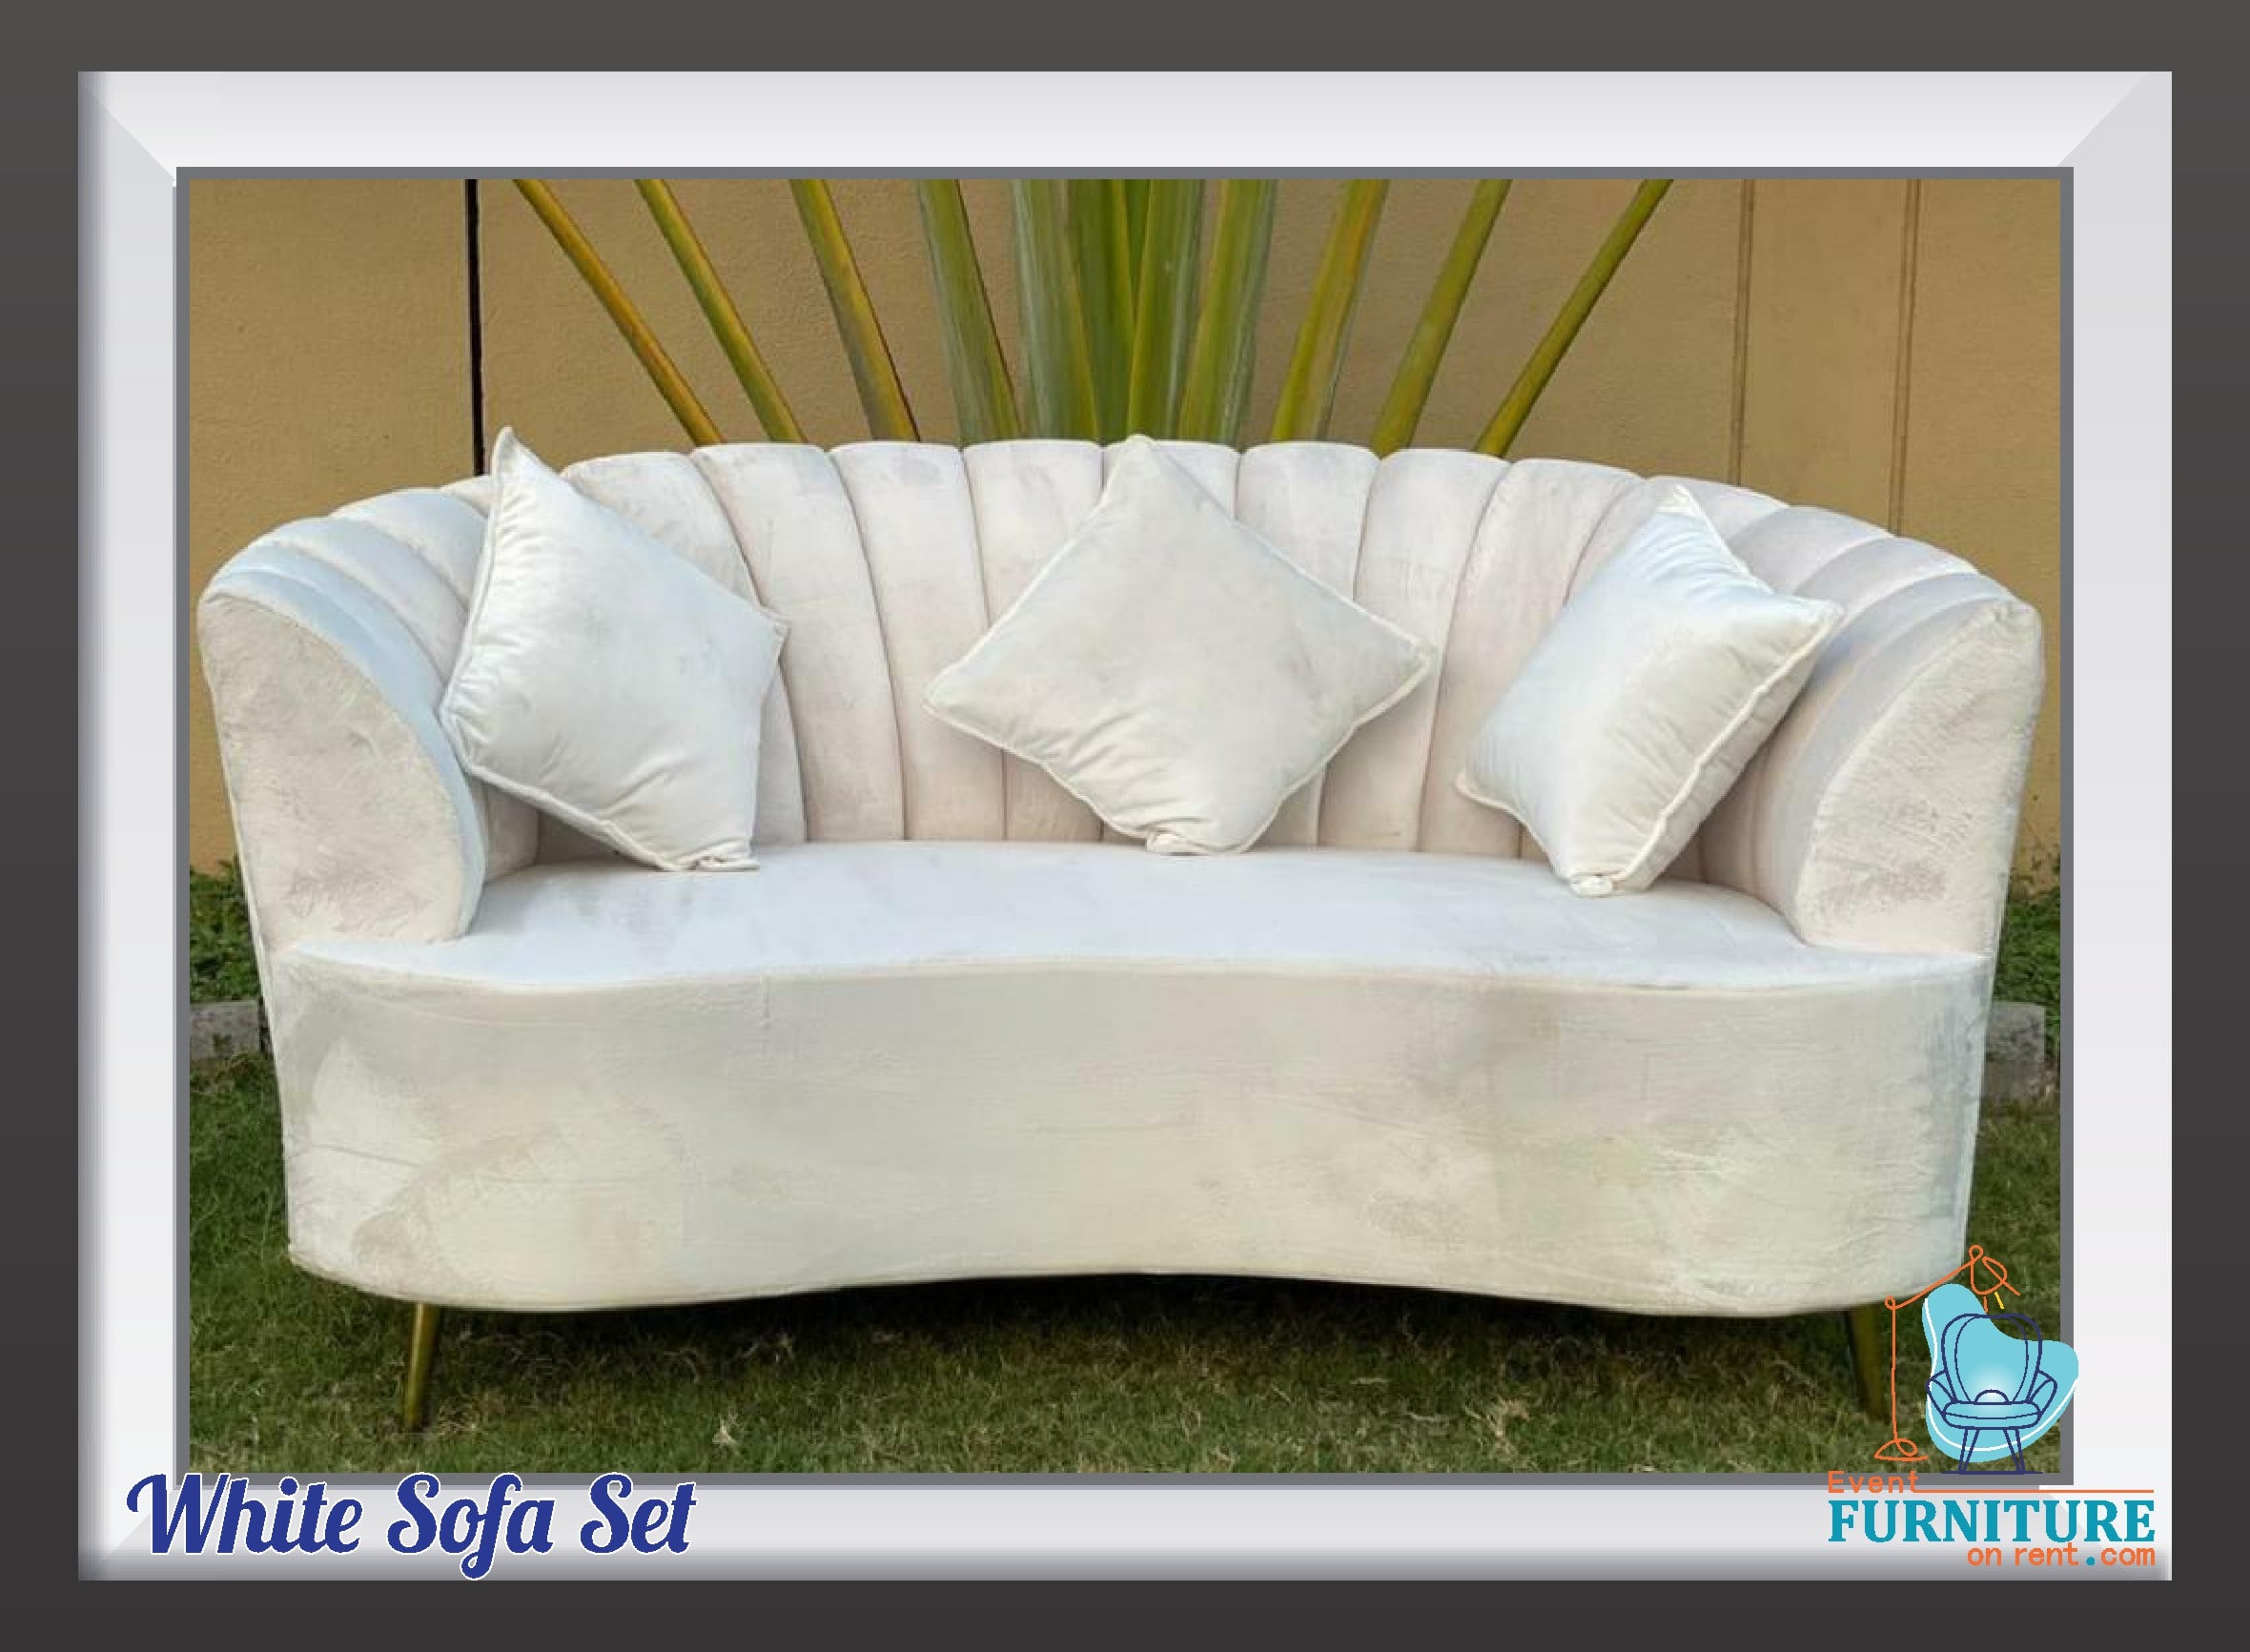 White Sofa Set Sbh 05 Furniture On